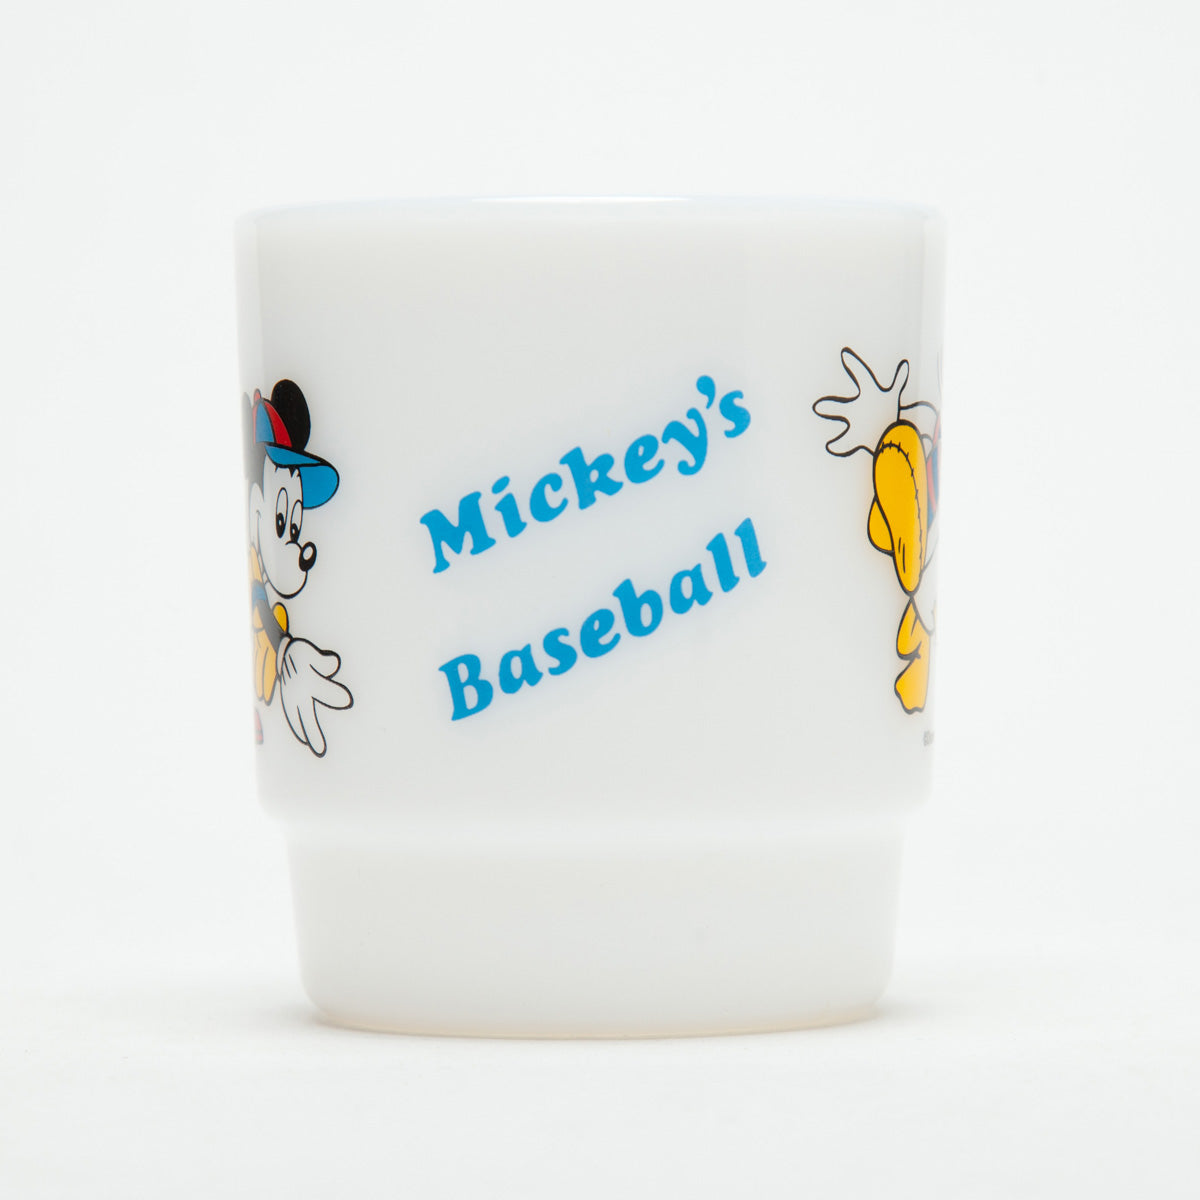 Fire-King スタッキングマグ Disney [Mickey's Baseball] – Fire-King